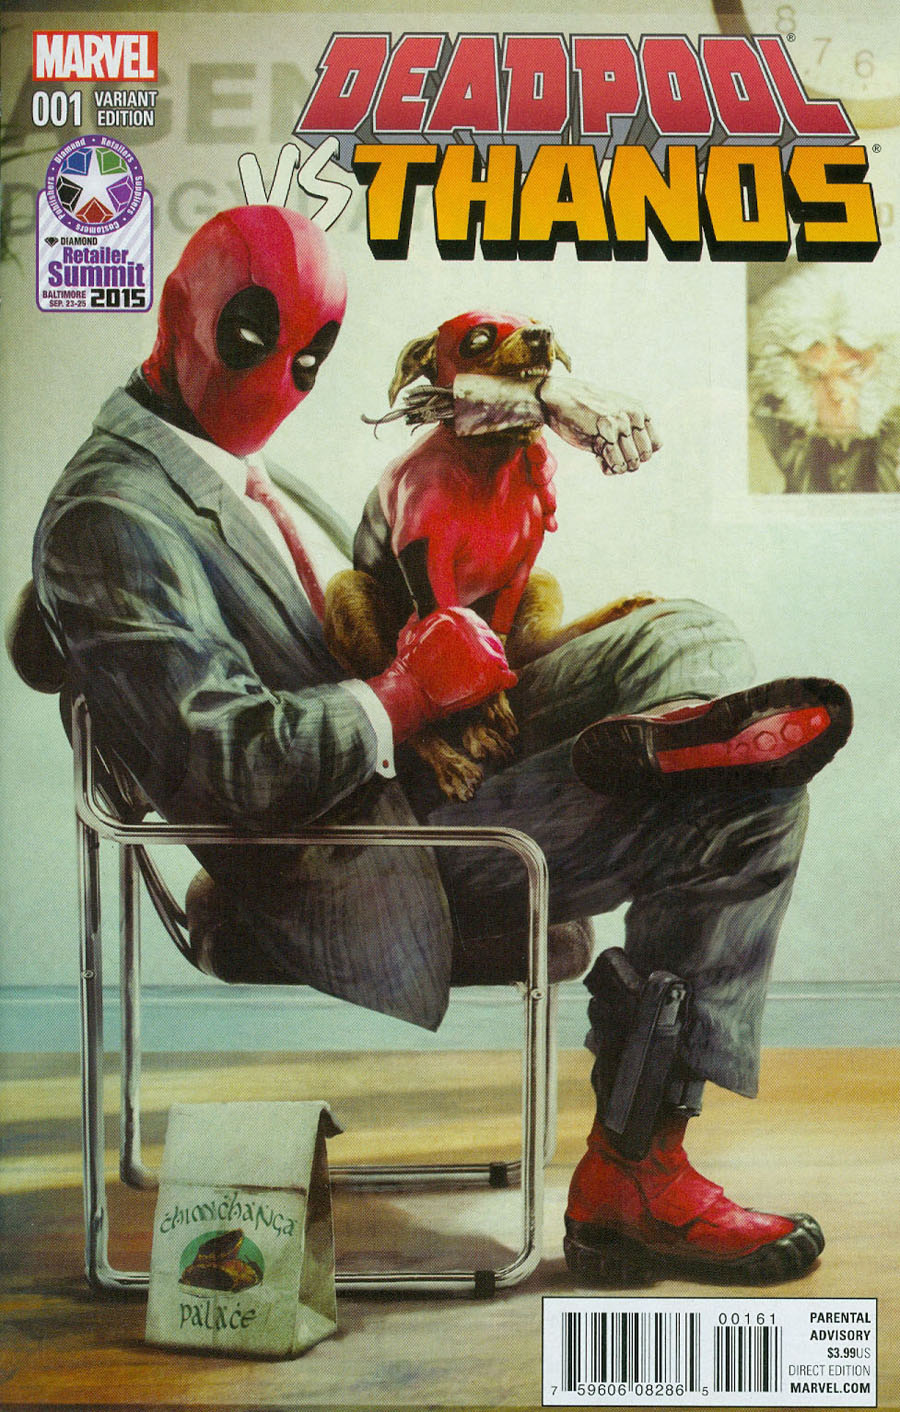 Deadpool vs Thanos #1 Cover D Retailer Summit 2015 Variant Cover